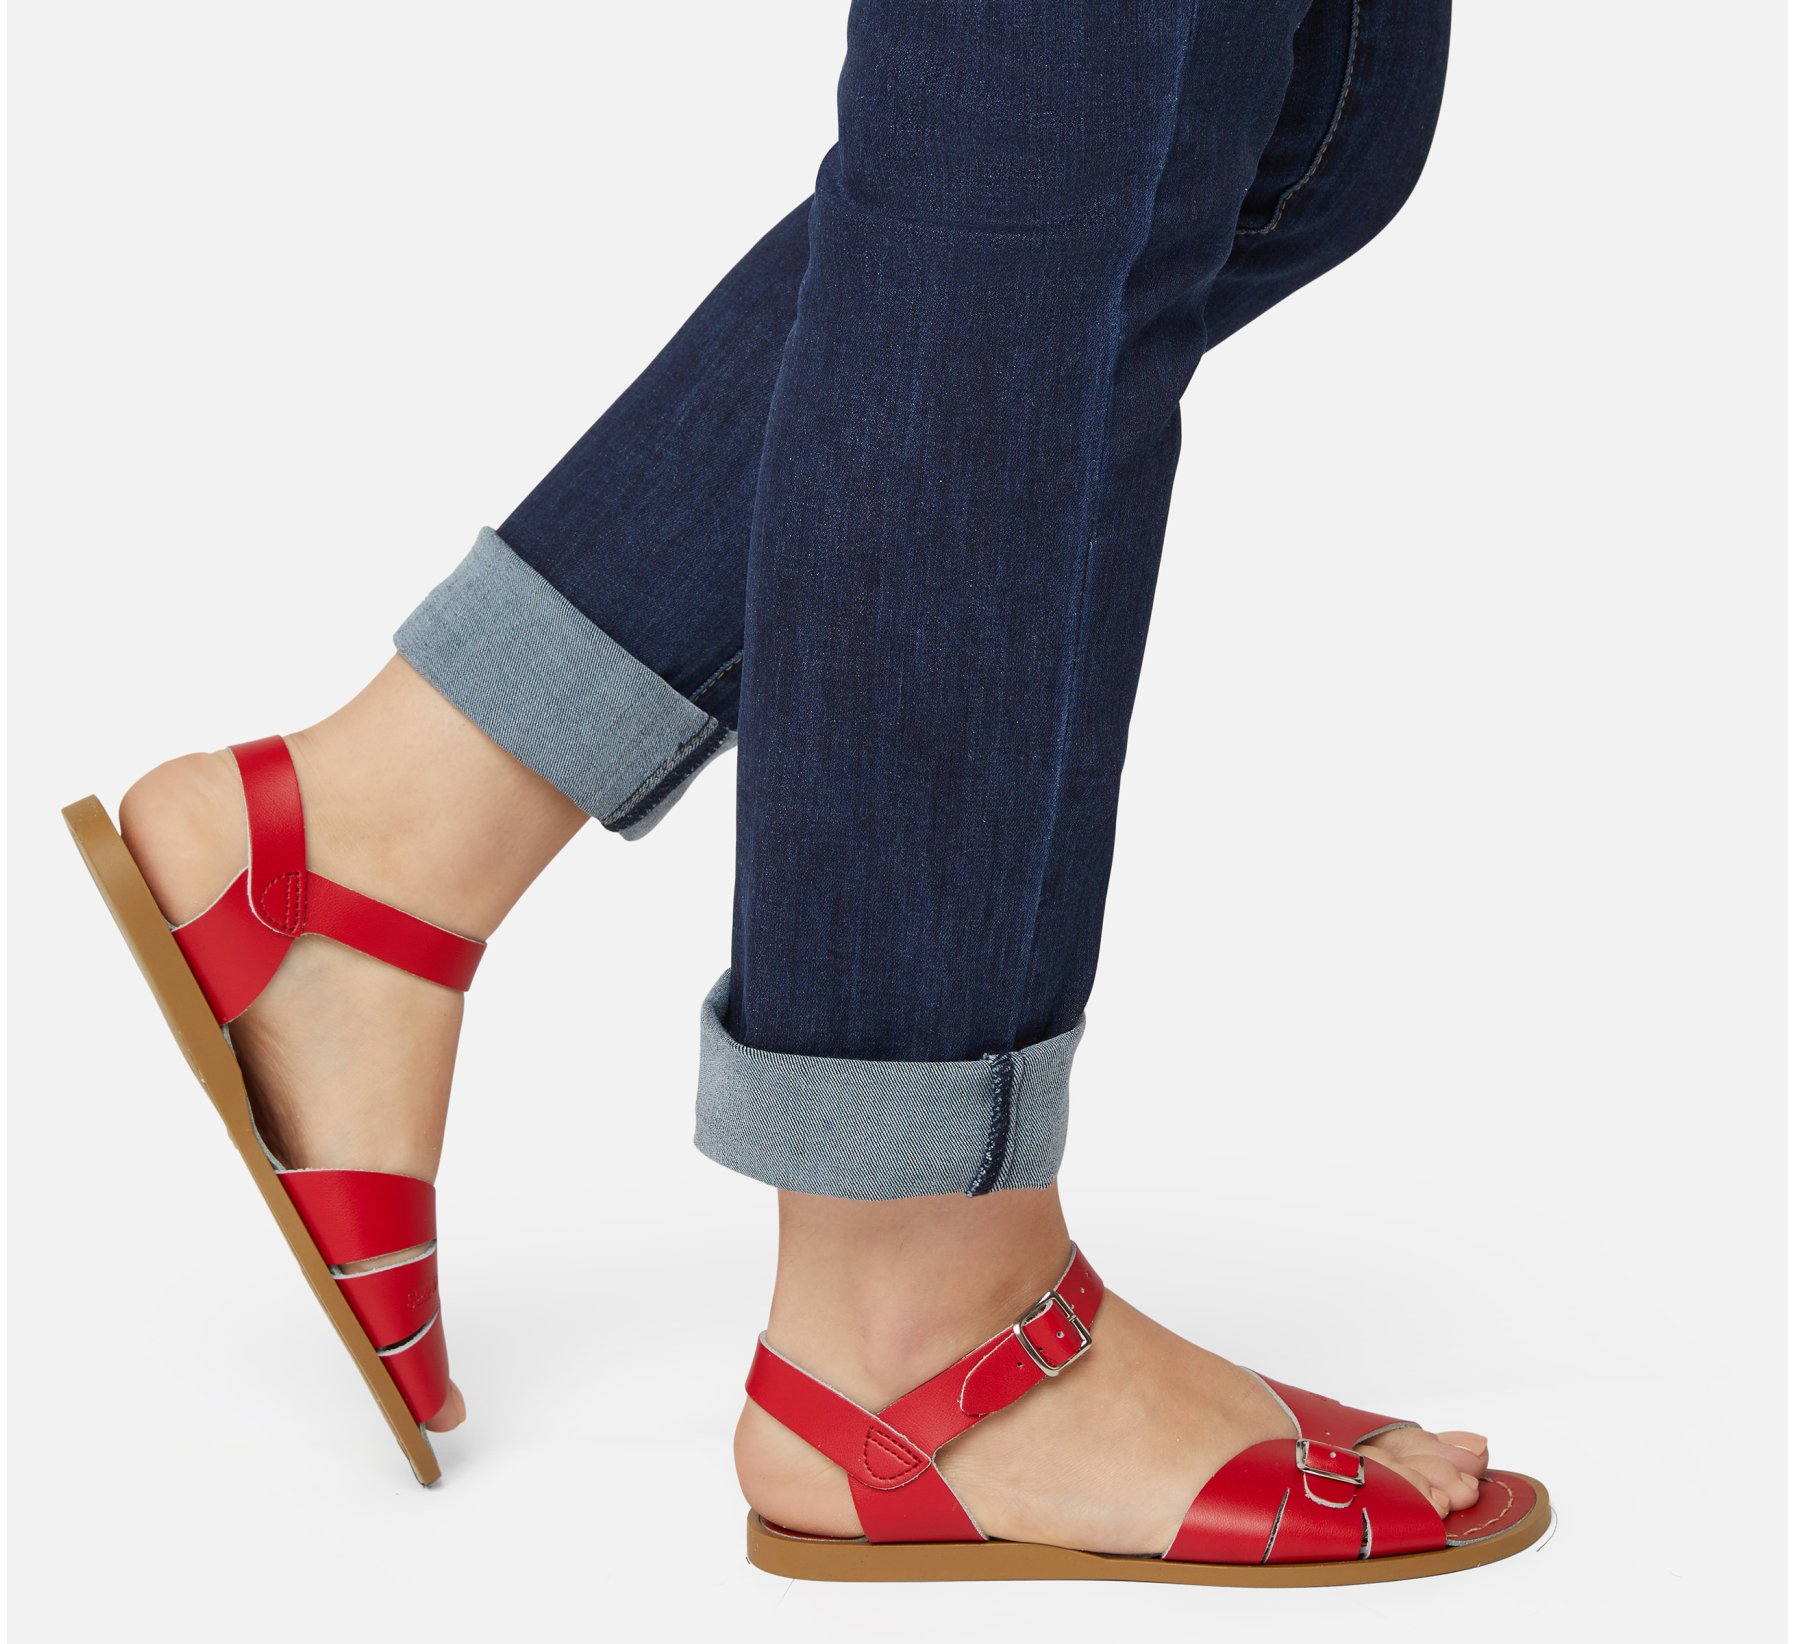 Classic Red Sandal - Salt Water Sandals